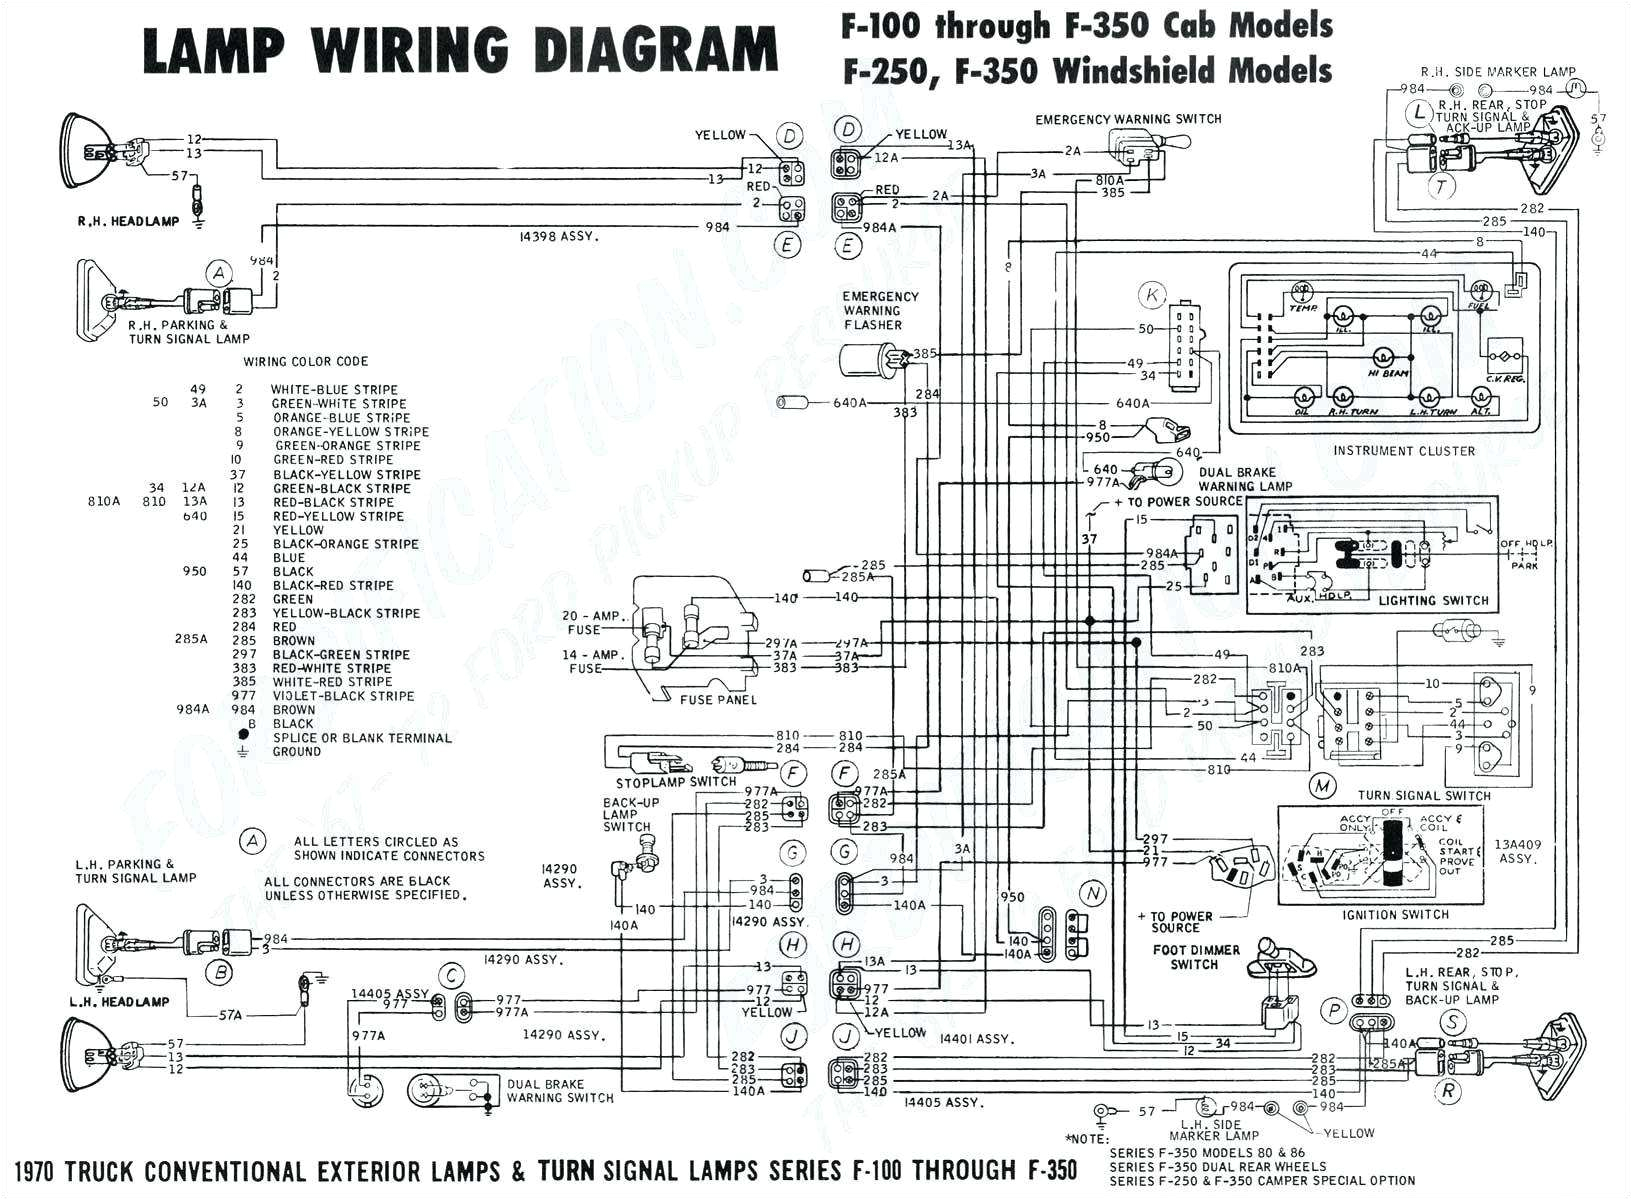 1987 ram 1500 fuse box wiring diagram schematic 1987 dodge ram fuse box diagram 1987 dodge ram fuse box